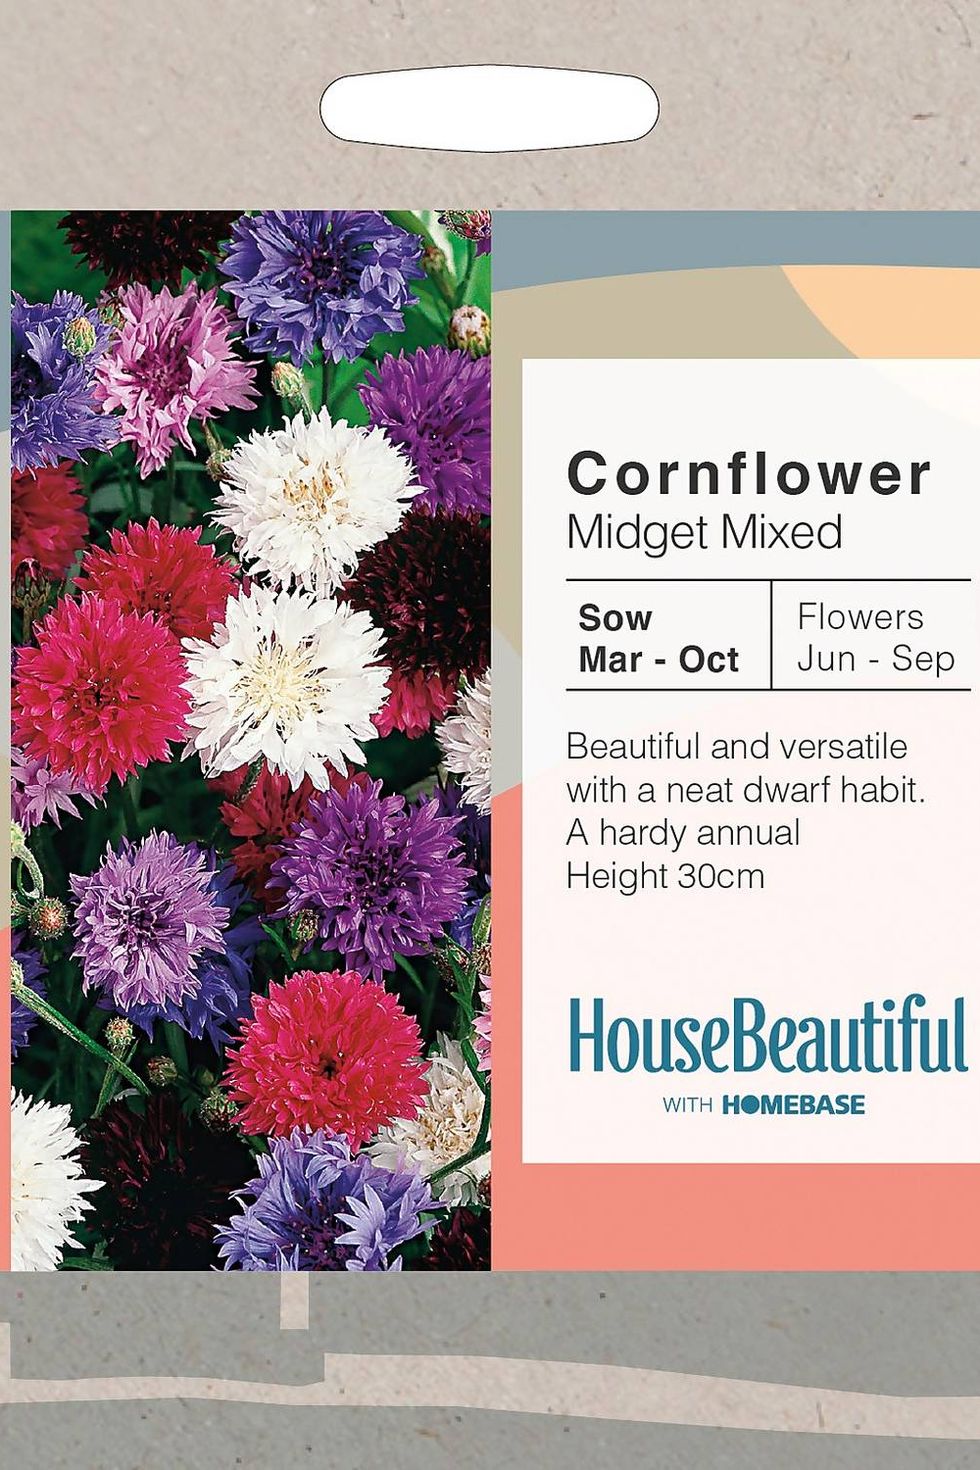 house beautiful cornflower midget mixed seeds